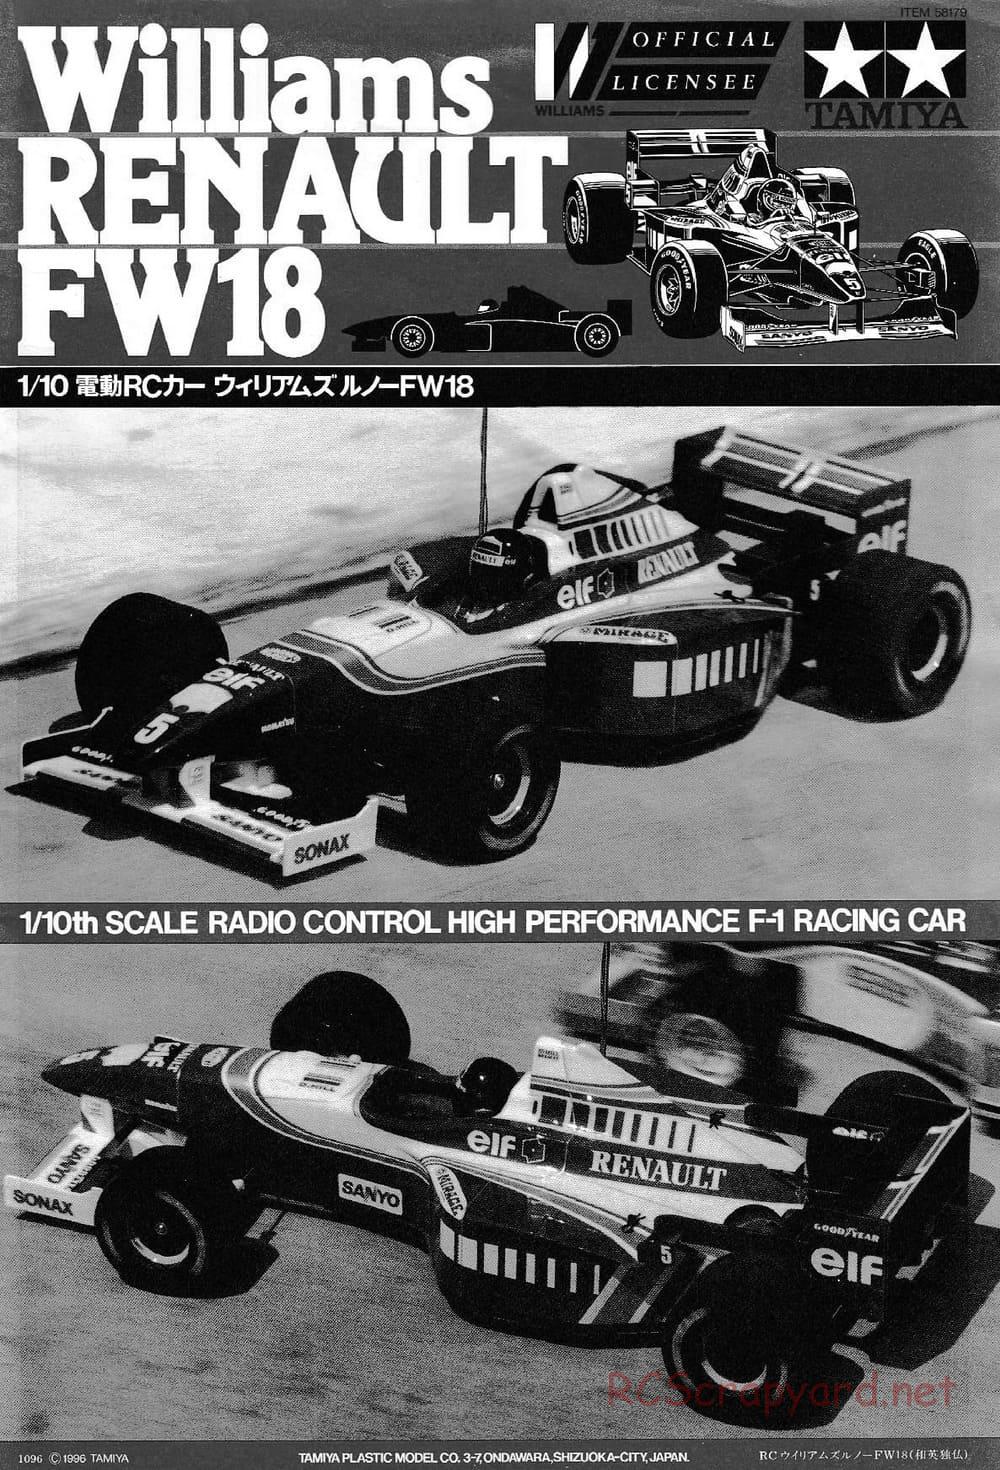 Tamiya - Williams Renault FW18 - F103RS Chassis - Manual - Page 1